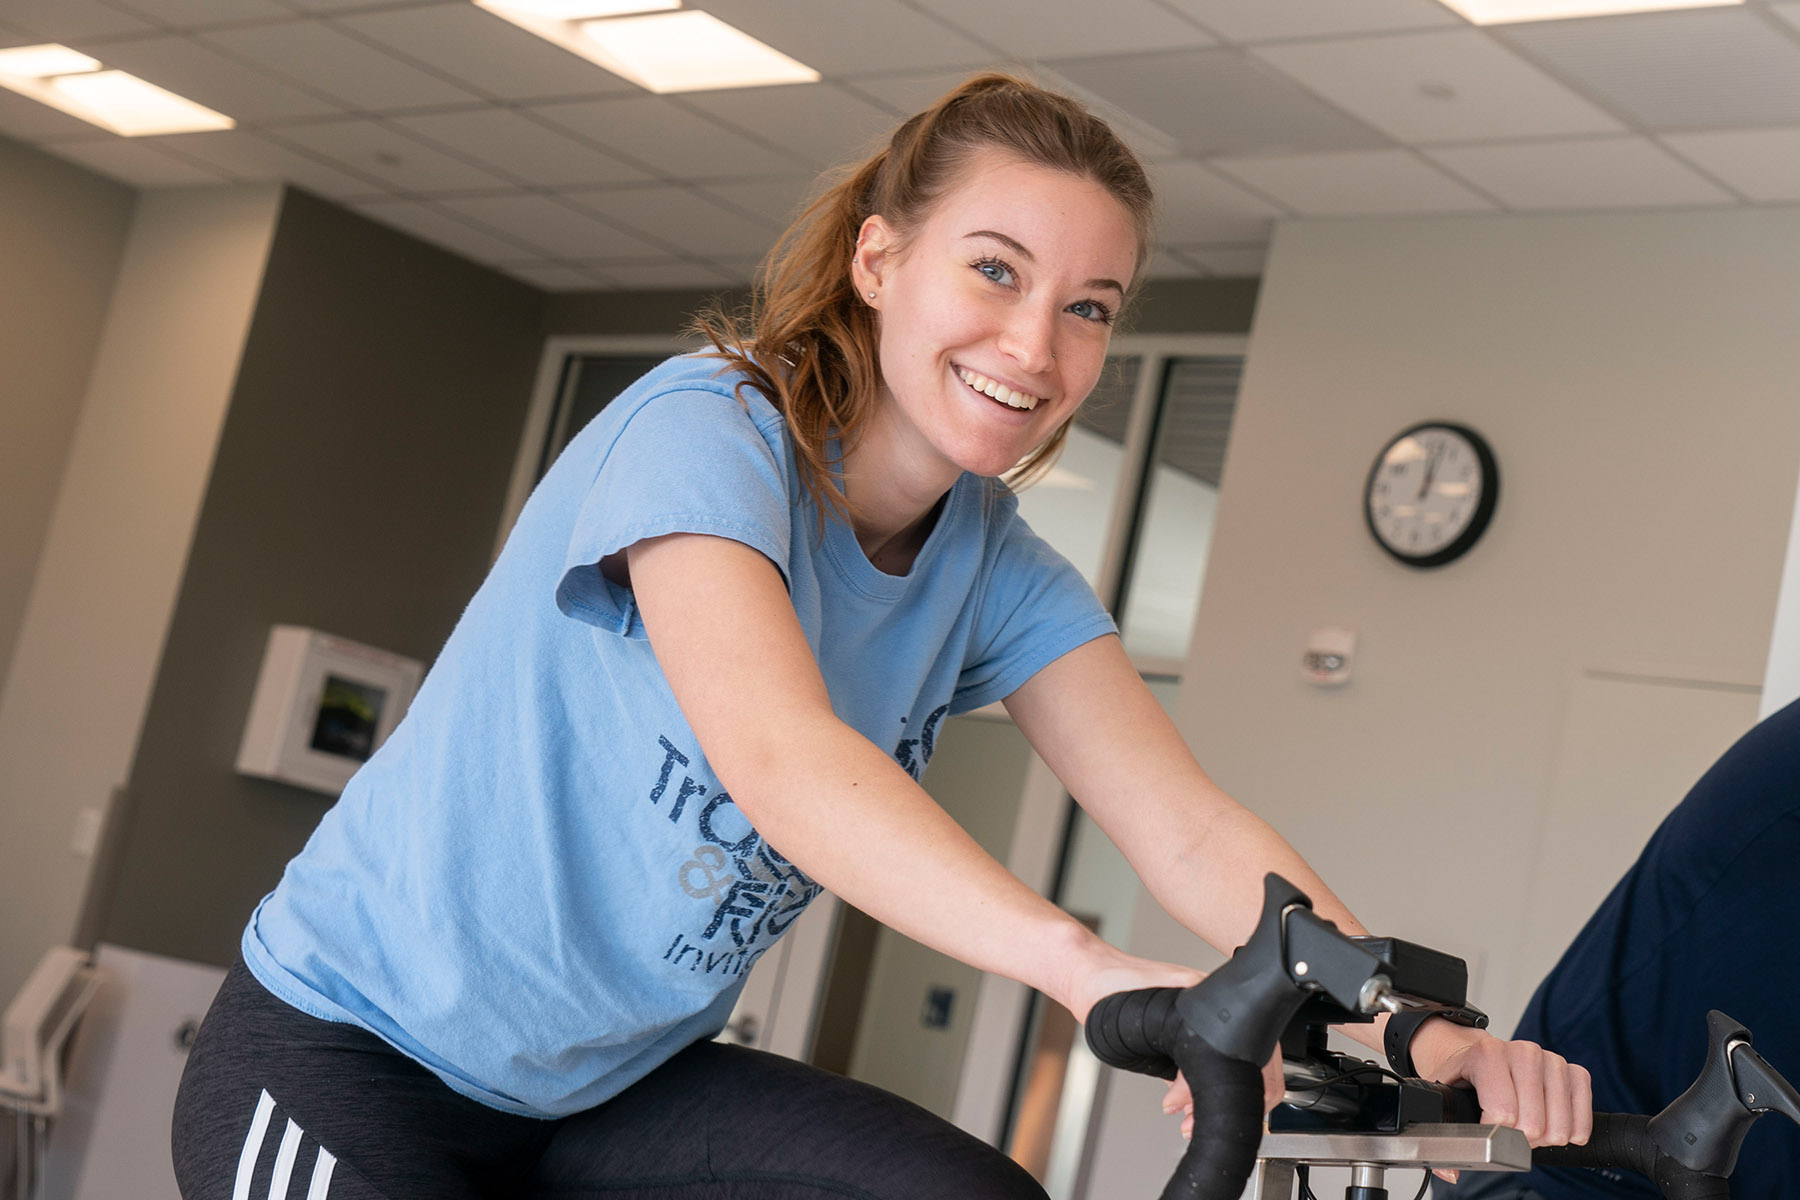 Student smiling on. exercise bike